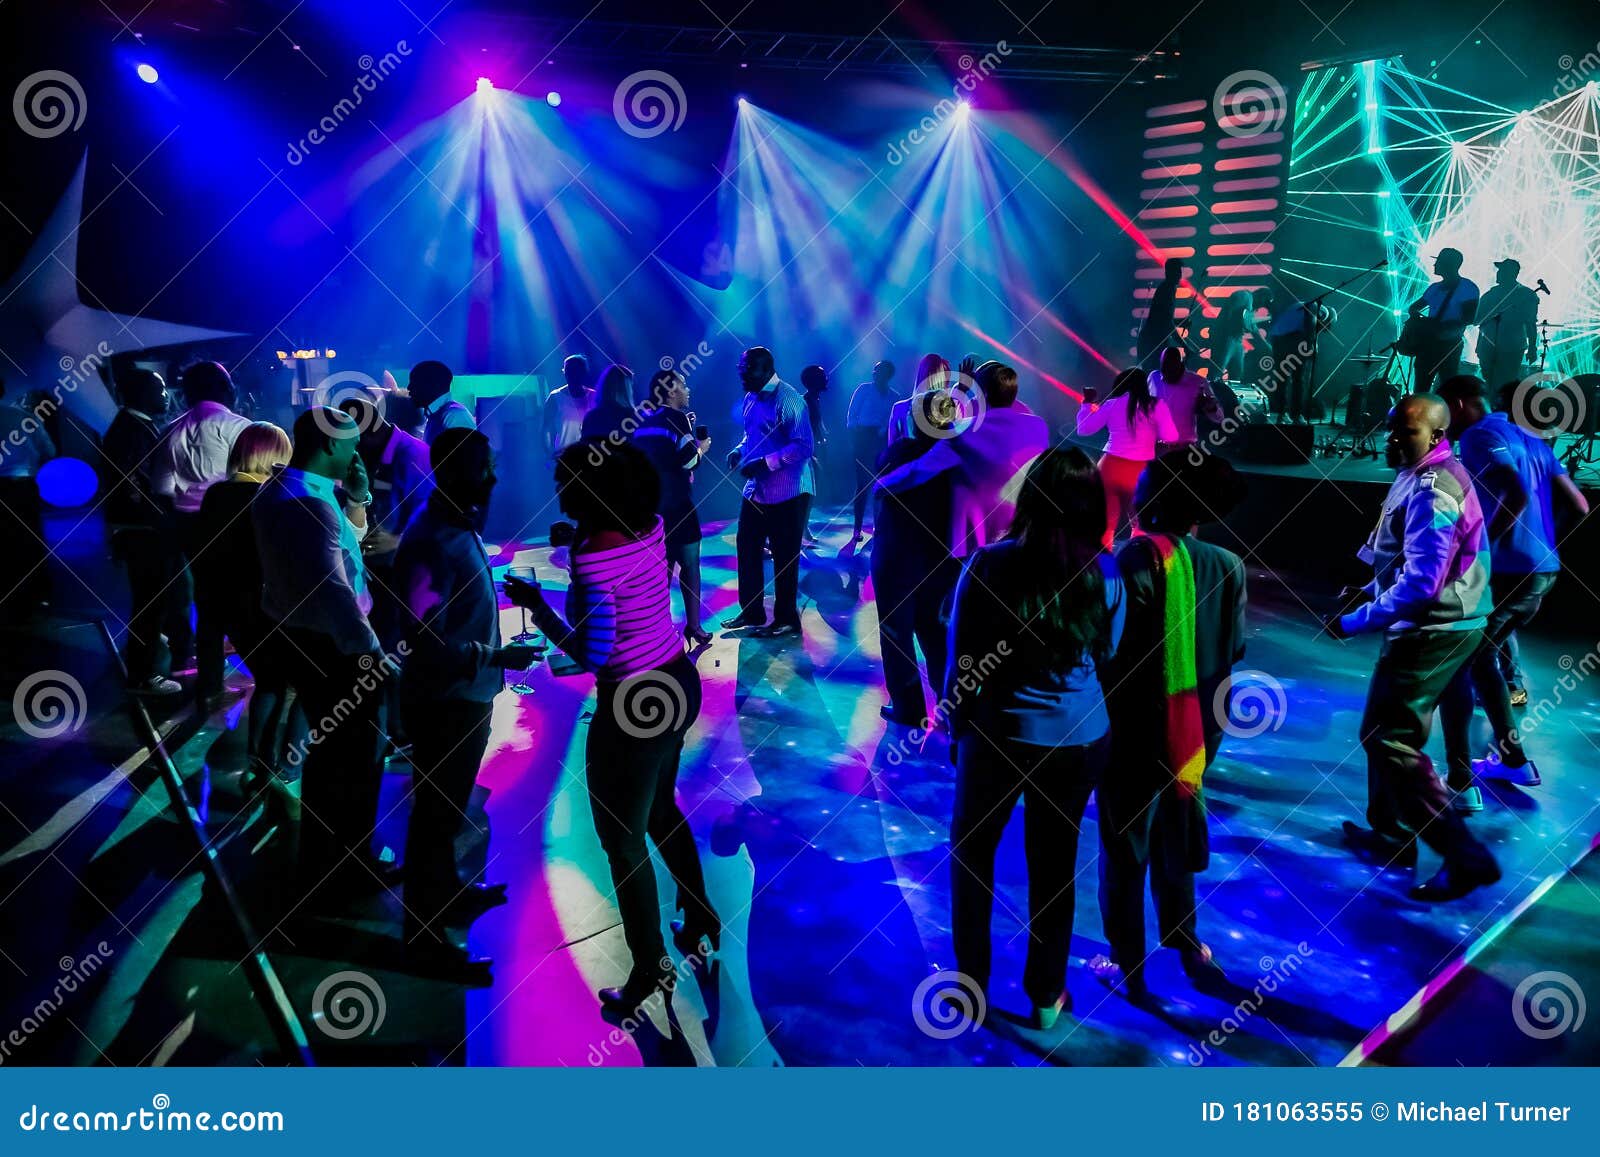 Group of People Dancing on a Dance Floor in Dark Night Club Environment ...